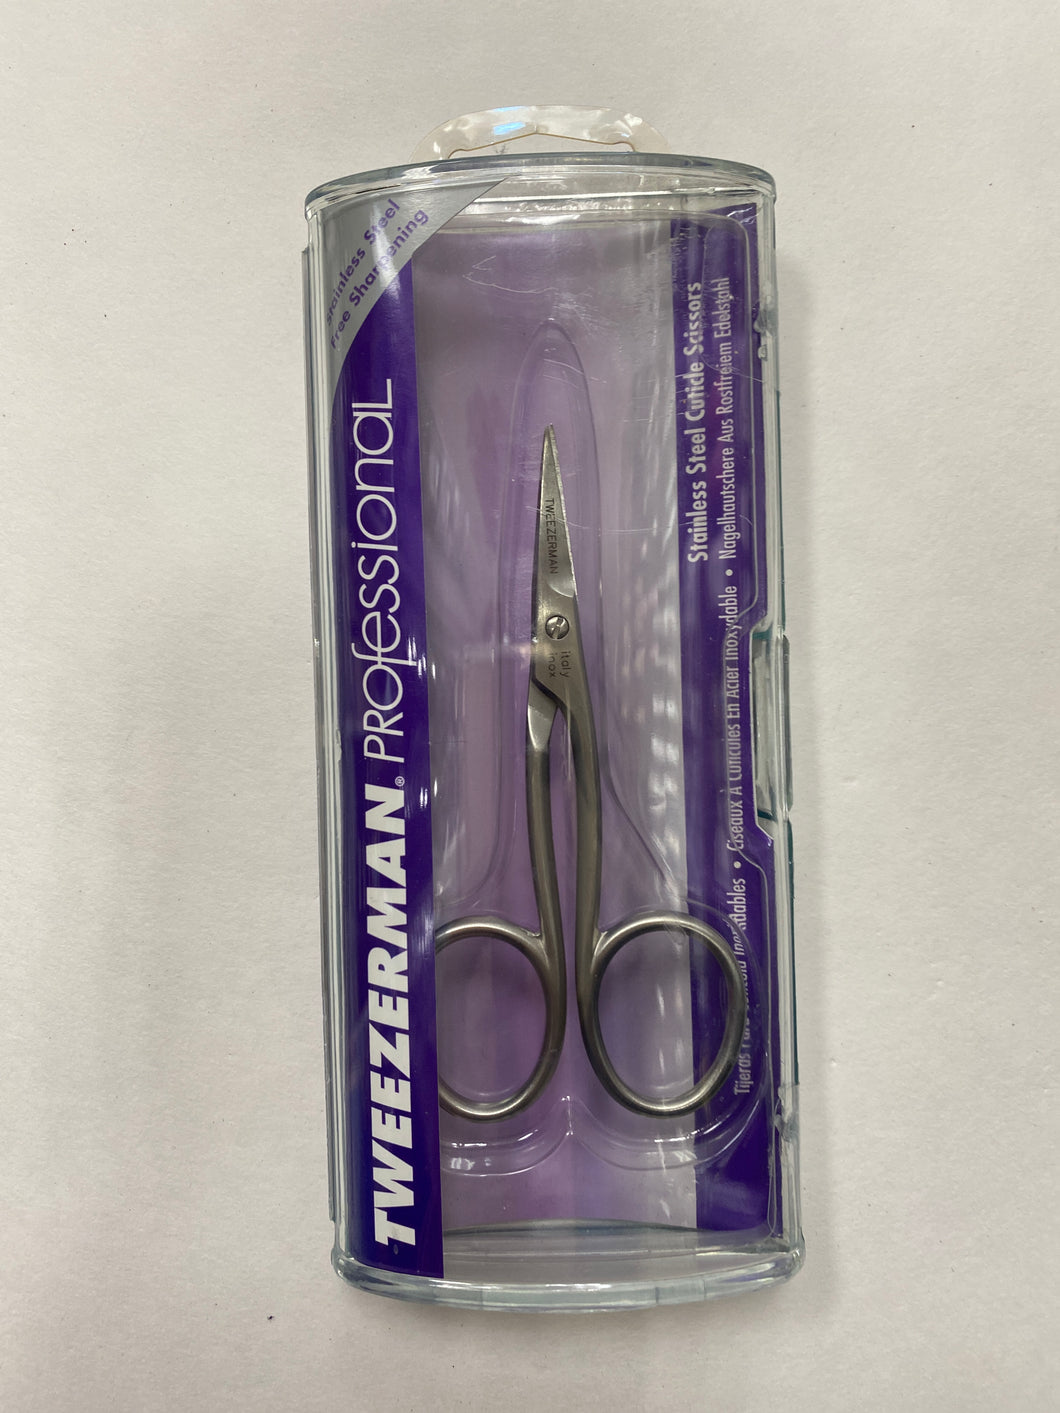 Tweezerman Professional Stainless Steel Cuticle Scissors